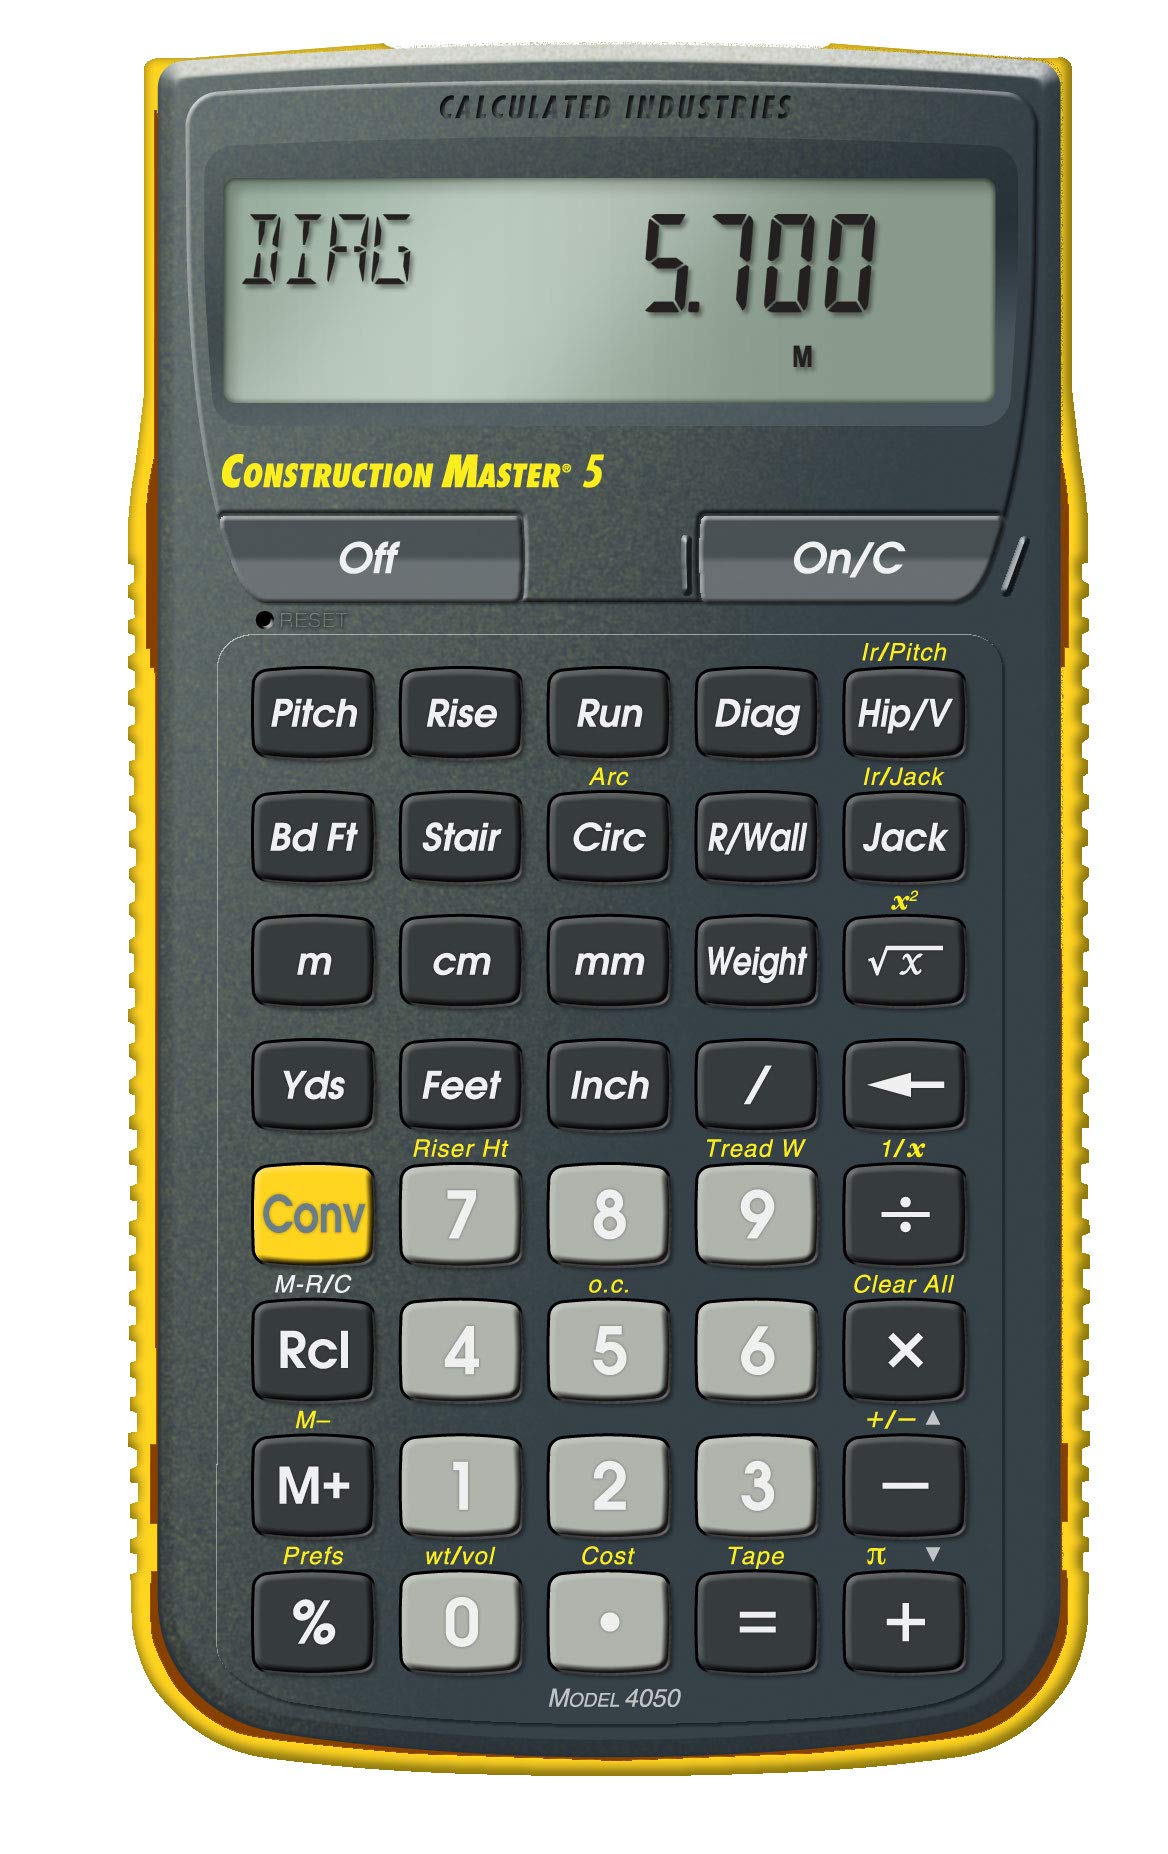 Calculated Industries 4050 Construction Master 5 آلة حاسبة للبناء